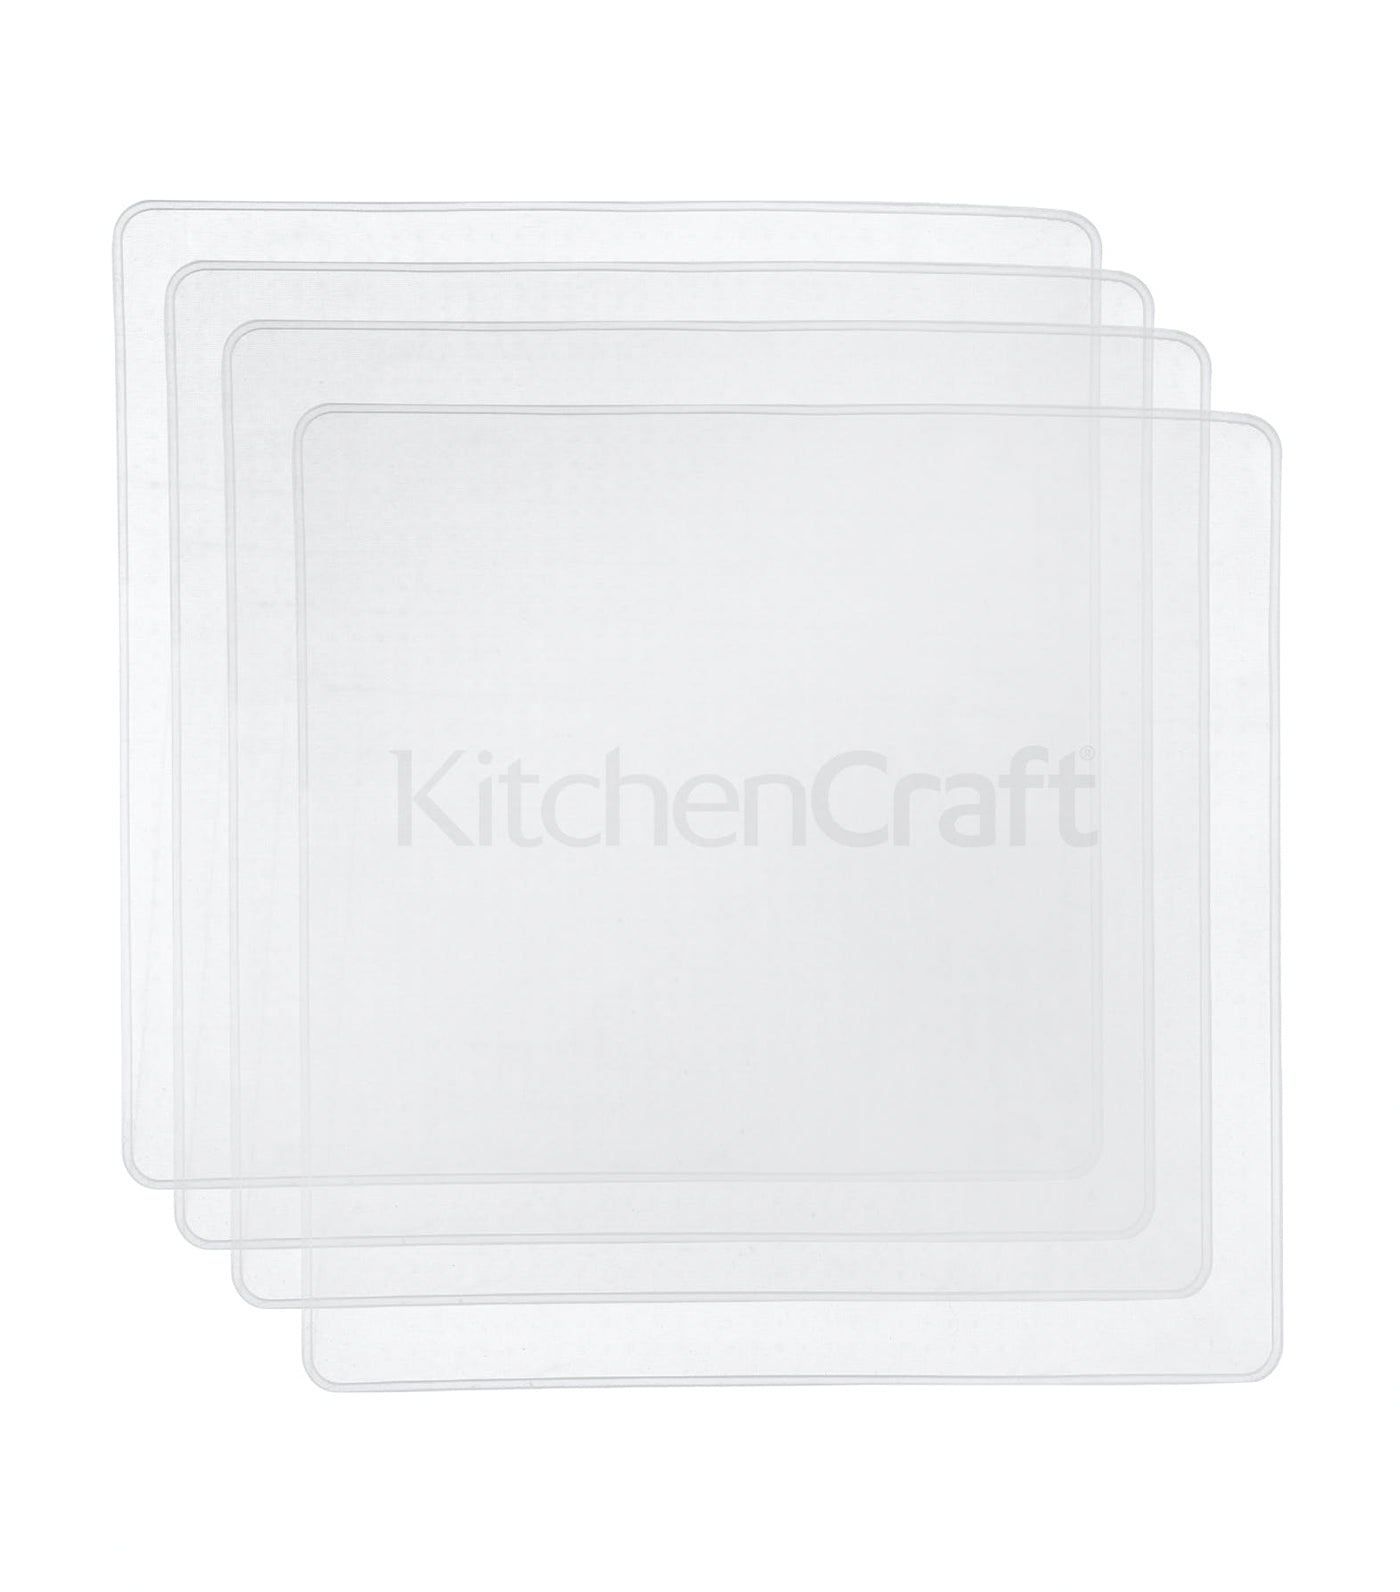 KitchenCraft Masterclass Silicone Stretch Lids - Set of 4